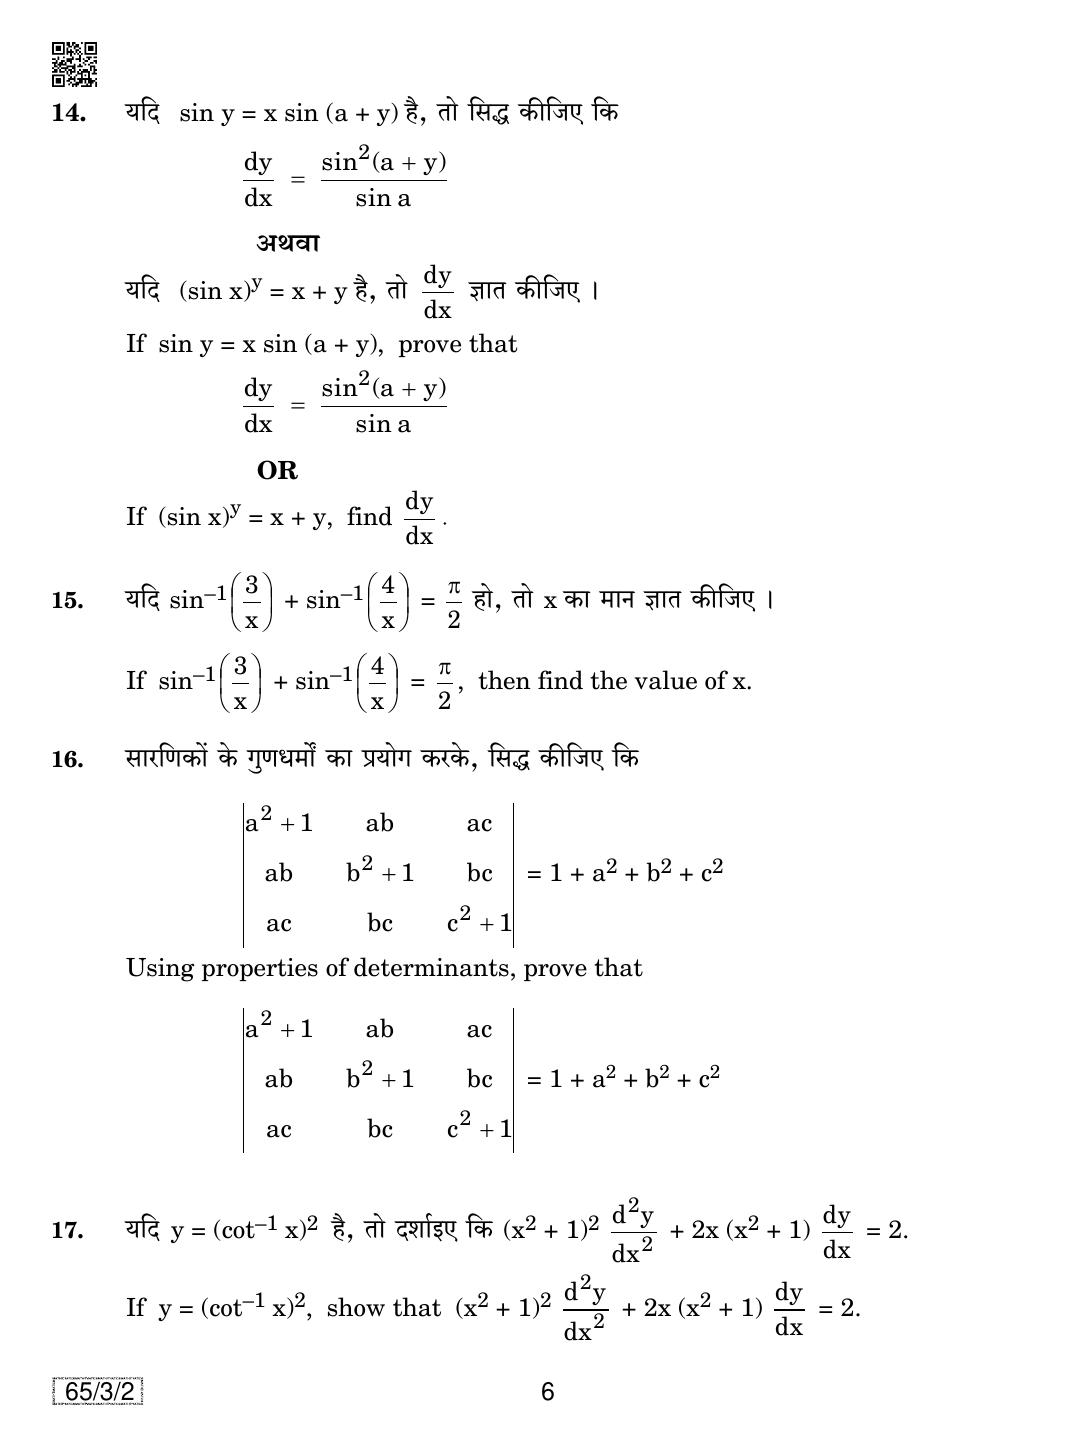 CBSE Class 12 65-3-2 Mathematics 2019 Question Paper - Page 6